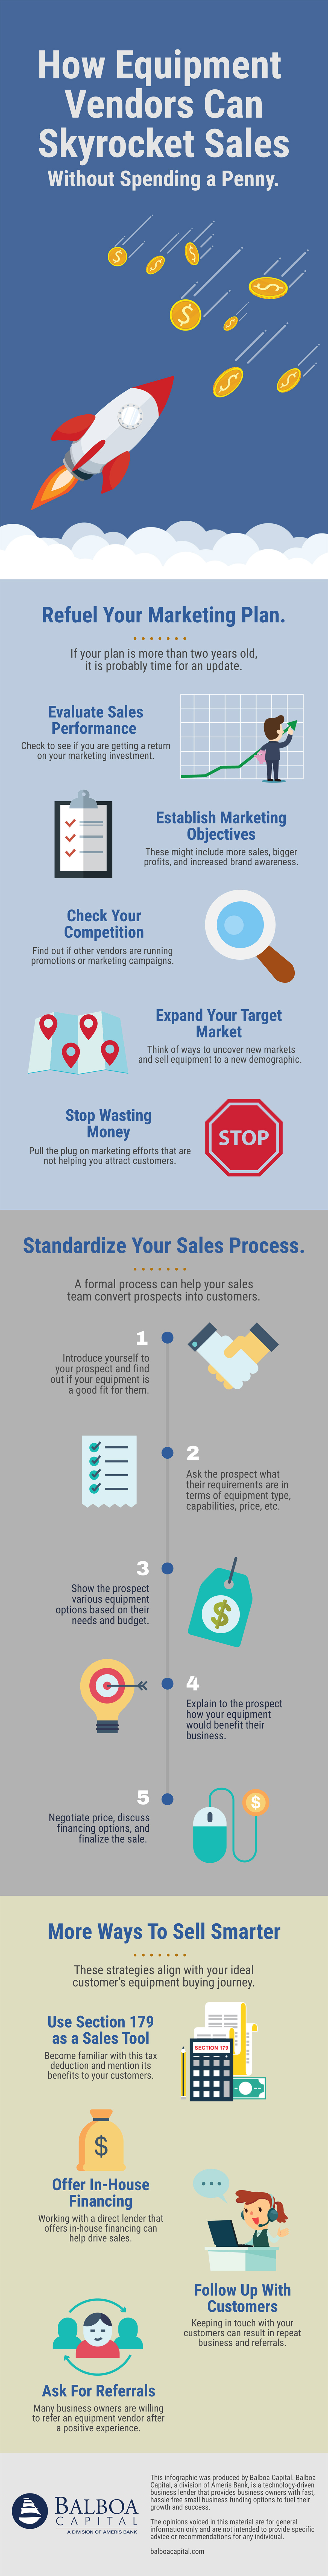 Equipment Vendor Sales Tips Infographic